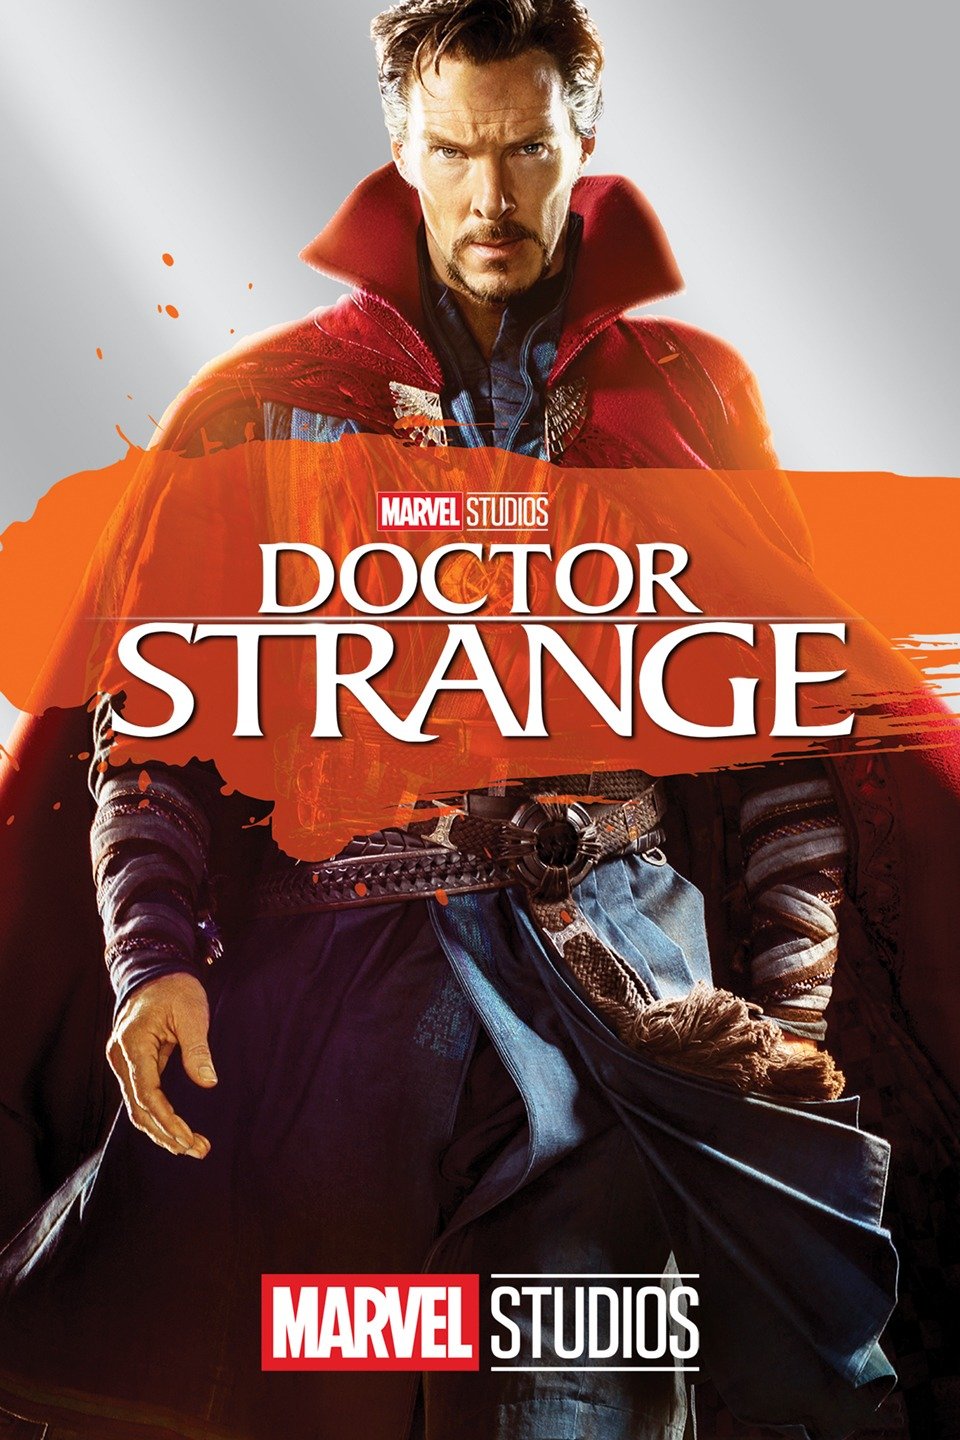 [MINI Super-HQ] Doctor Strange (2016) ด็อกเตอร์ สเตรนจ์ จอมเวทย์มหากาฬ [1080p] [พากย์ไทย 5.1+ เสียงอังกฤษ DTS] [บรรยายไทย + อังกฤษ] [เสียงไทย + ซับไทย]